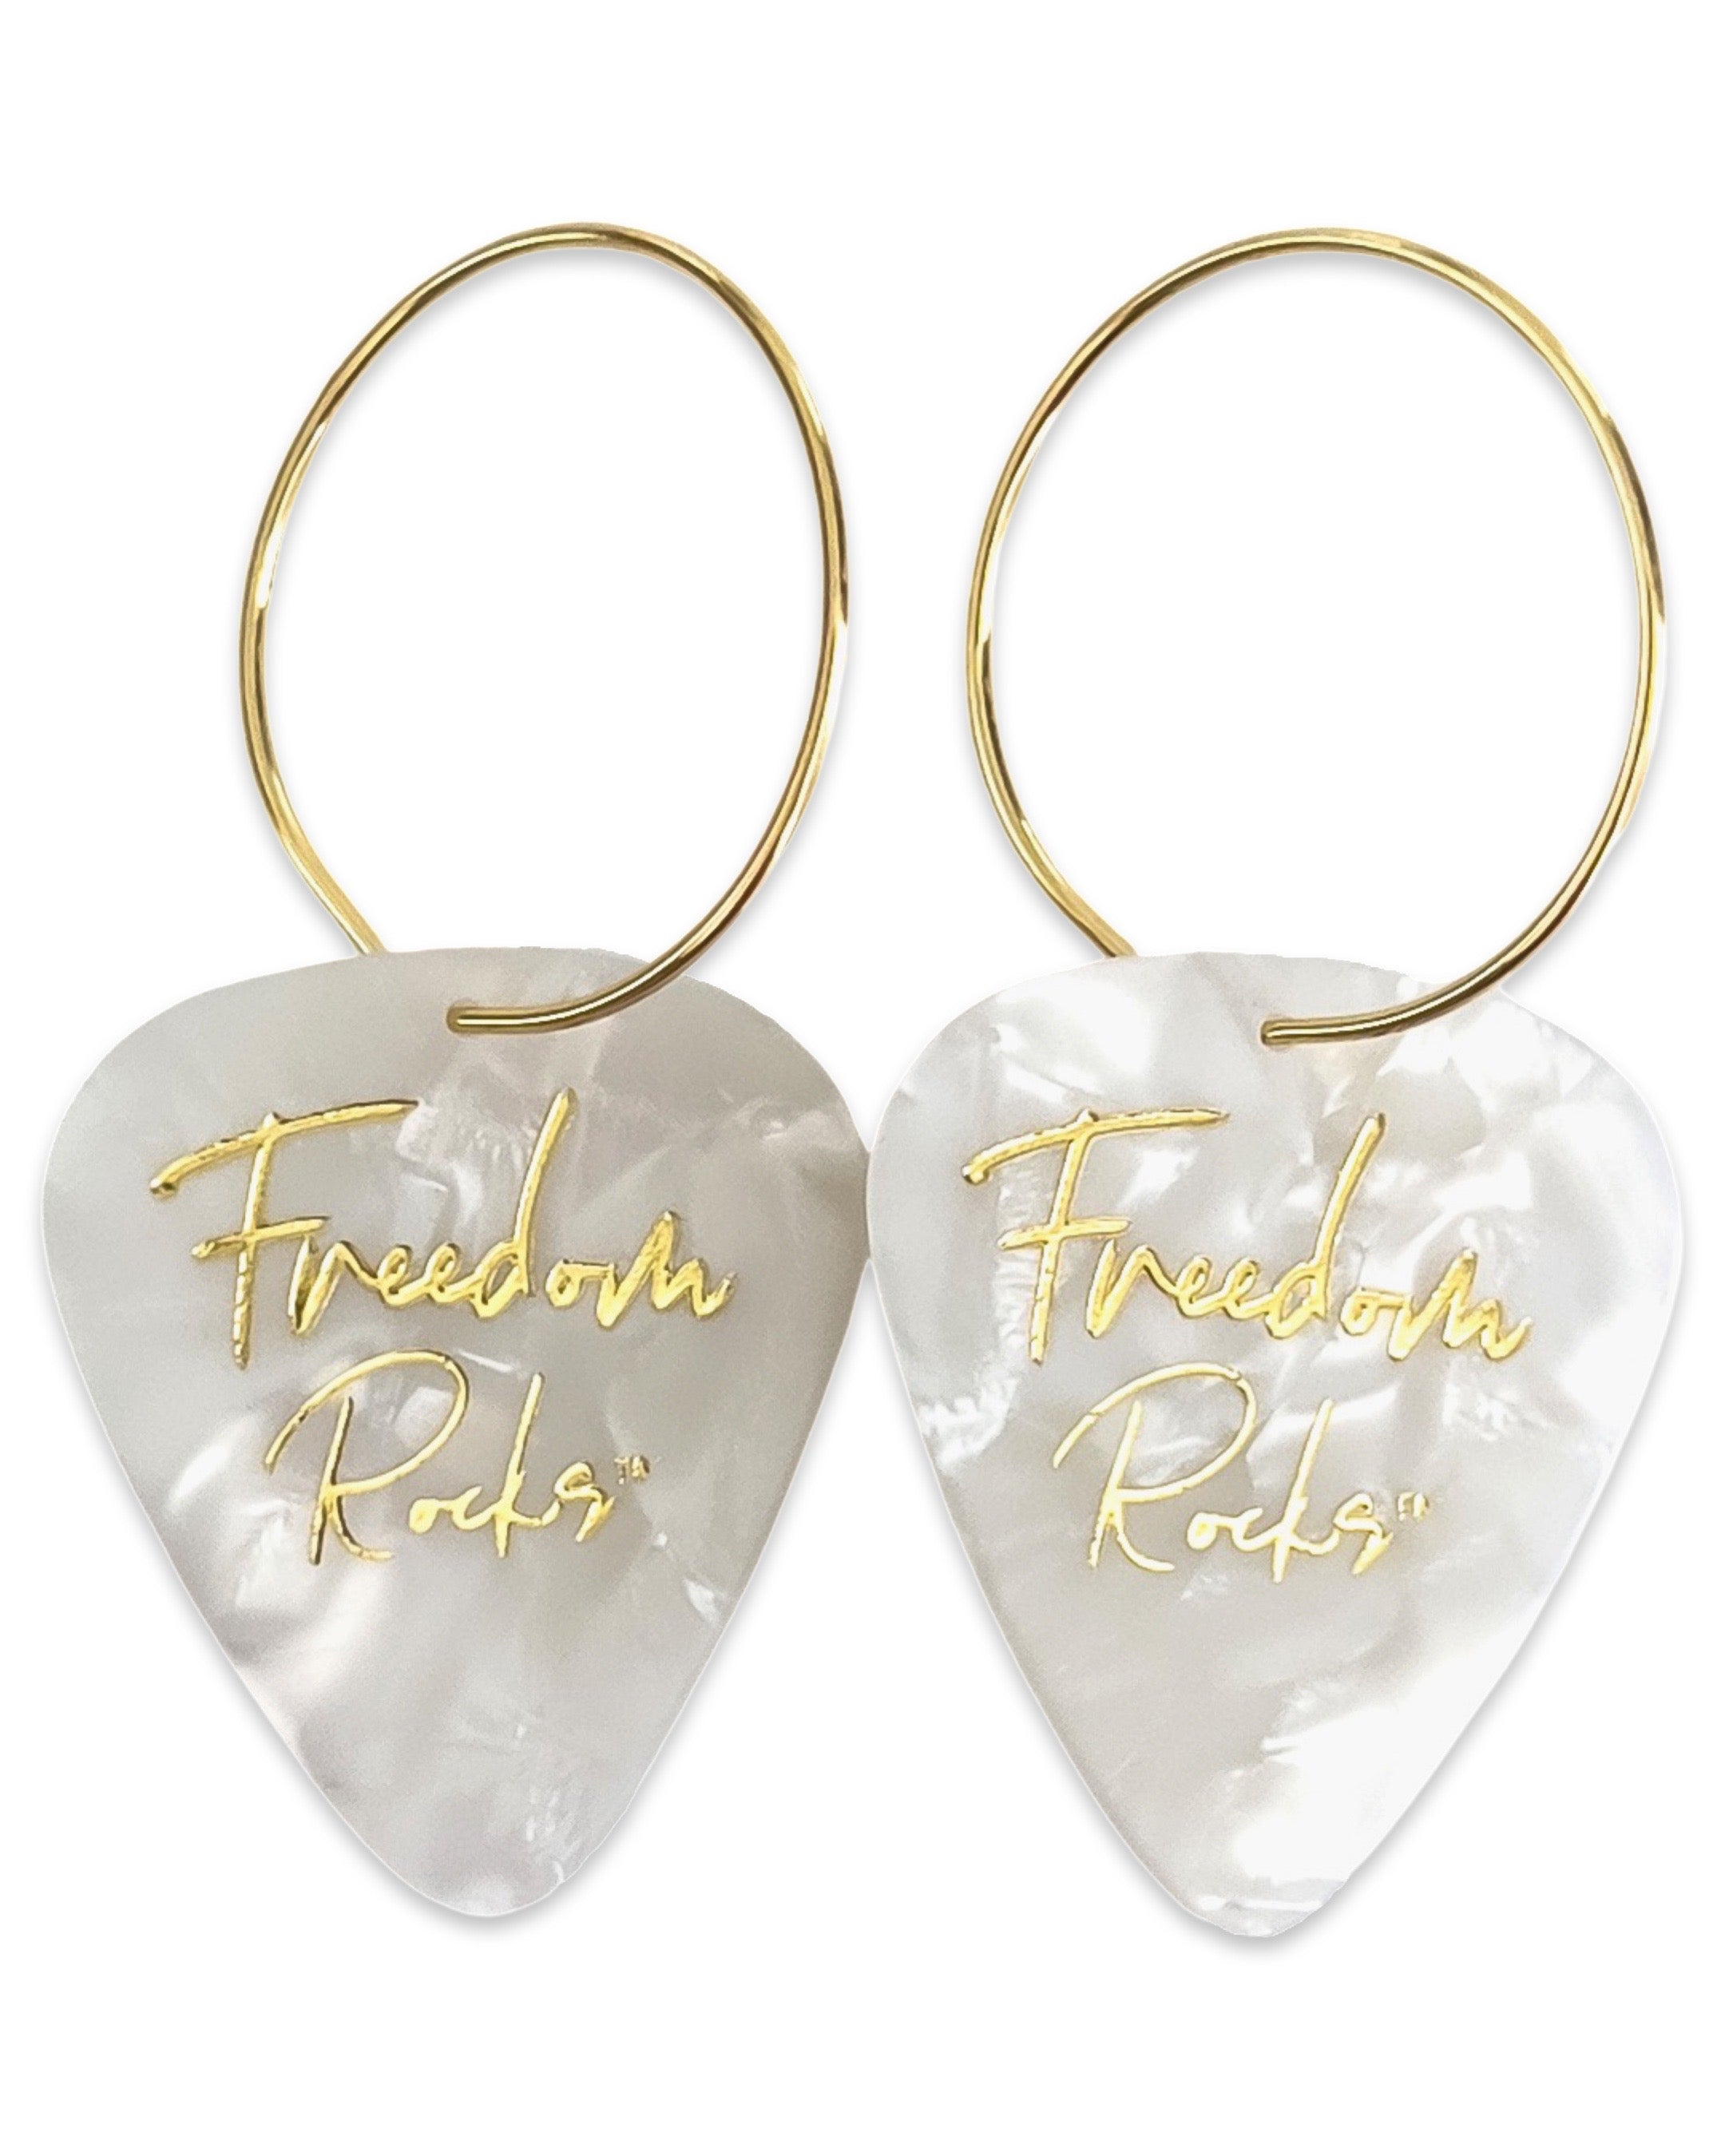 Freedom Rocks White Single Guitar Pick Earrings